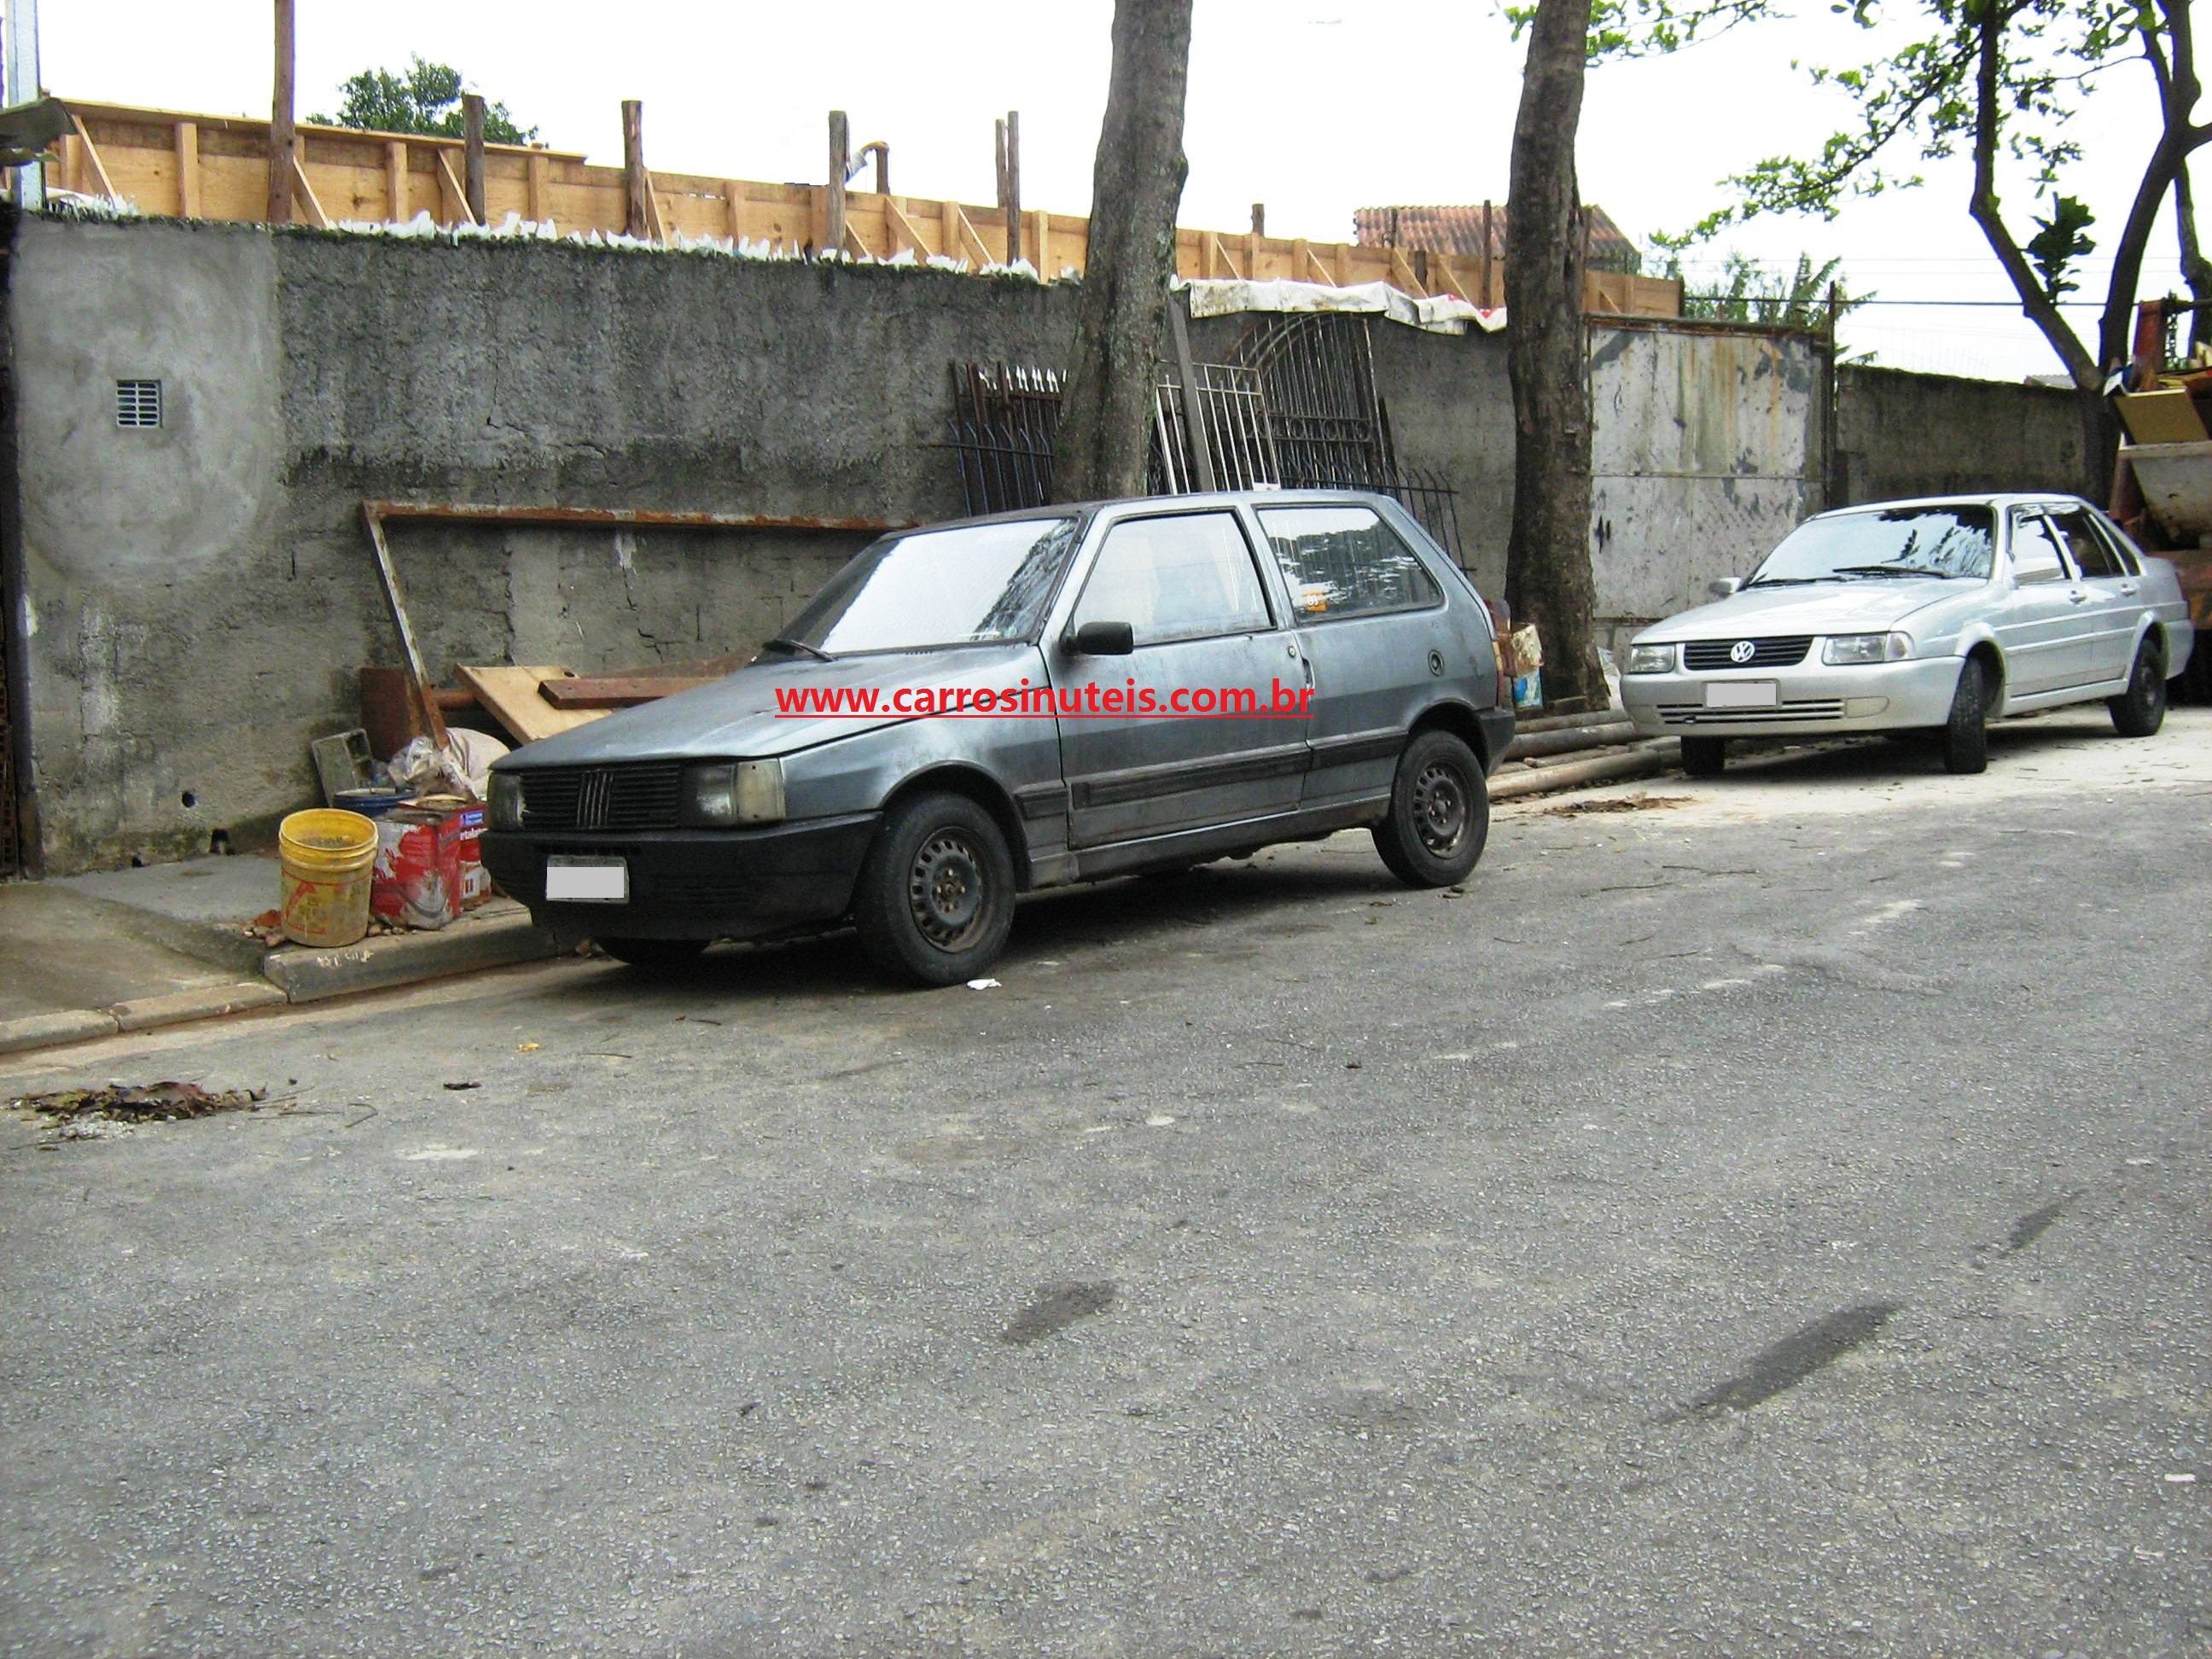 Fiat Uno, Valério, São Paulo, SP